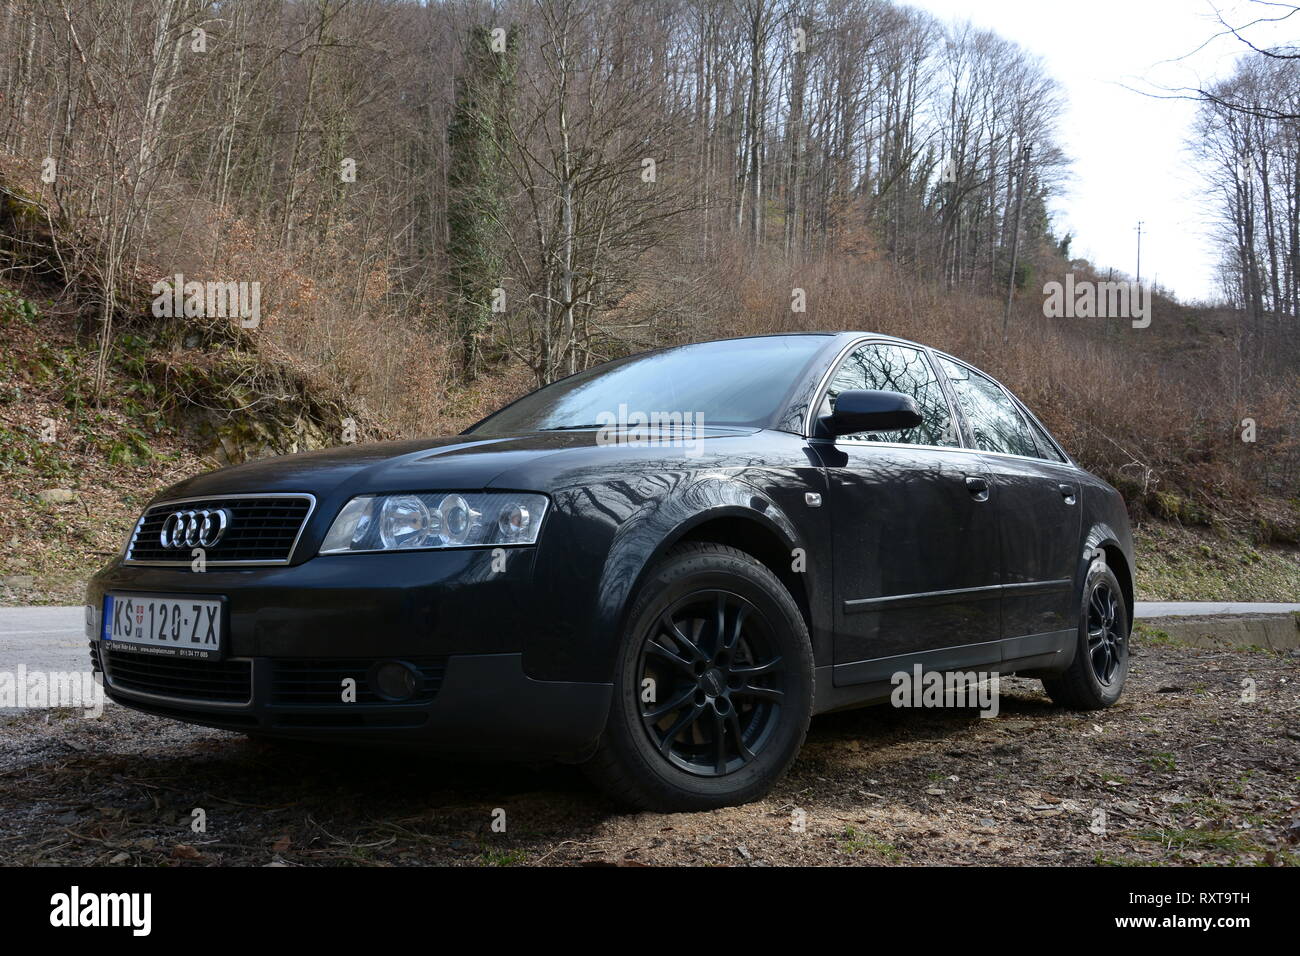 82 imágenes, fotos de stock, objetos en 3D y vectores sobre Audi b6